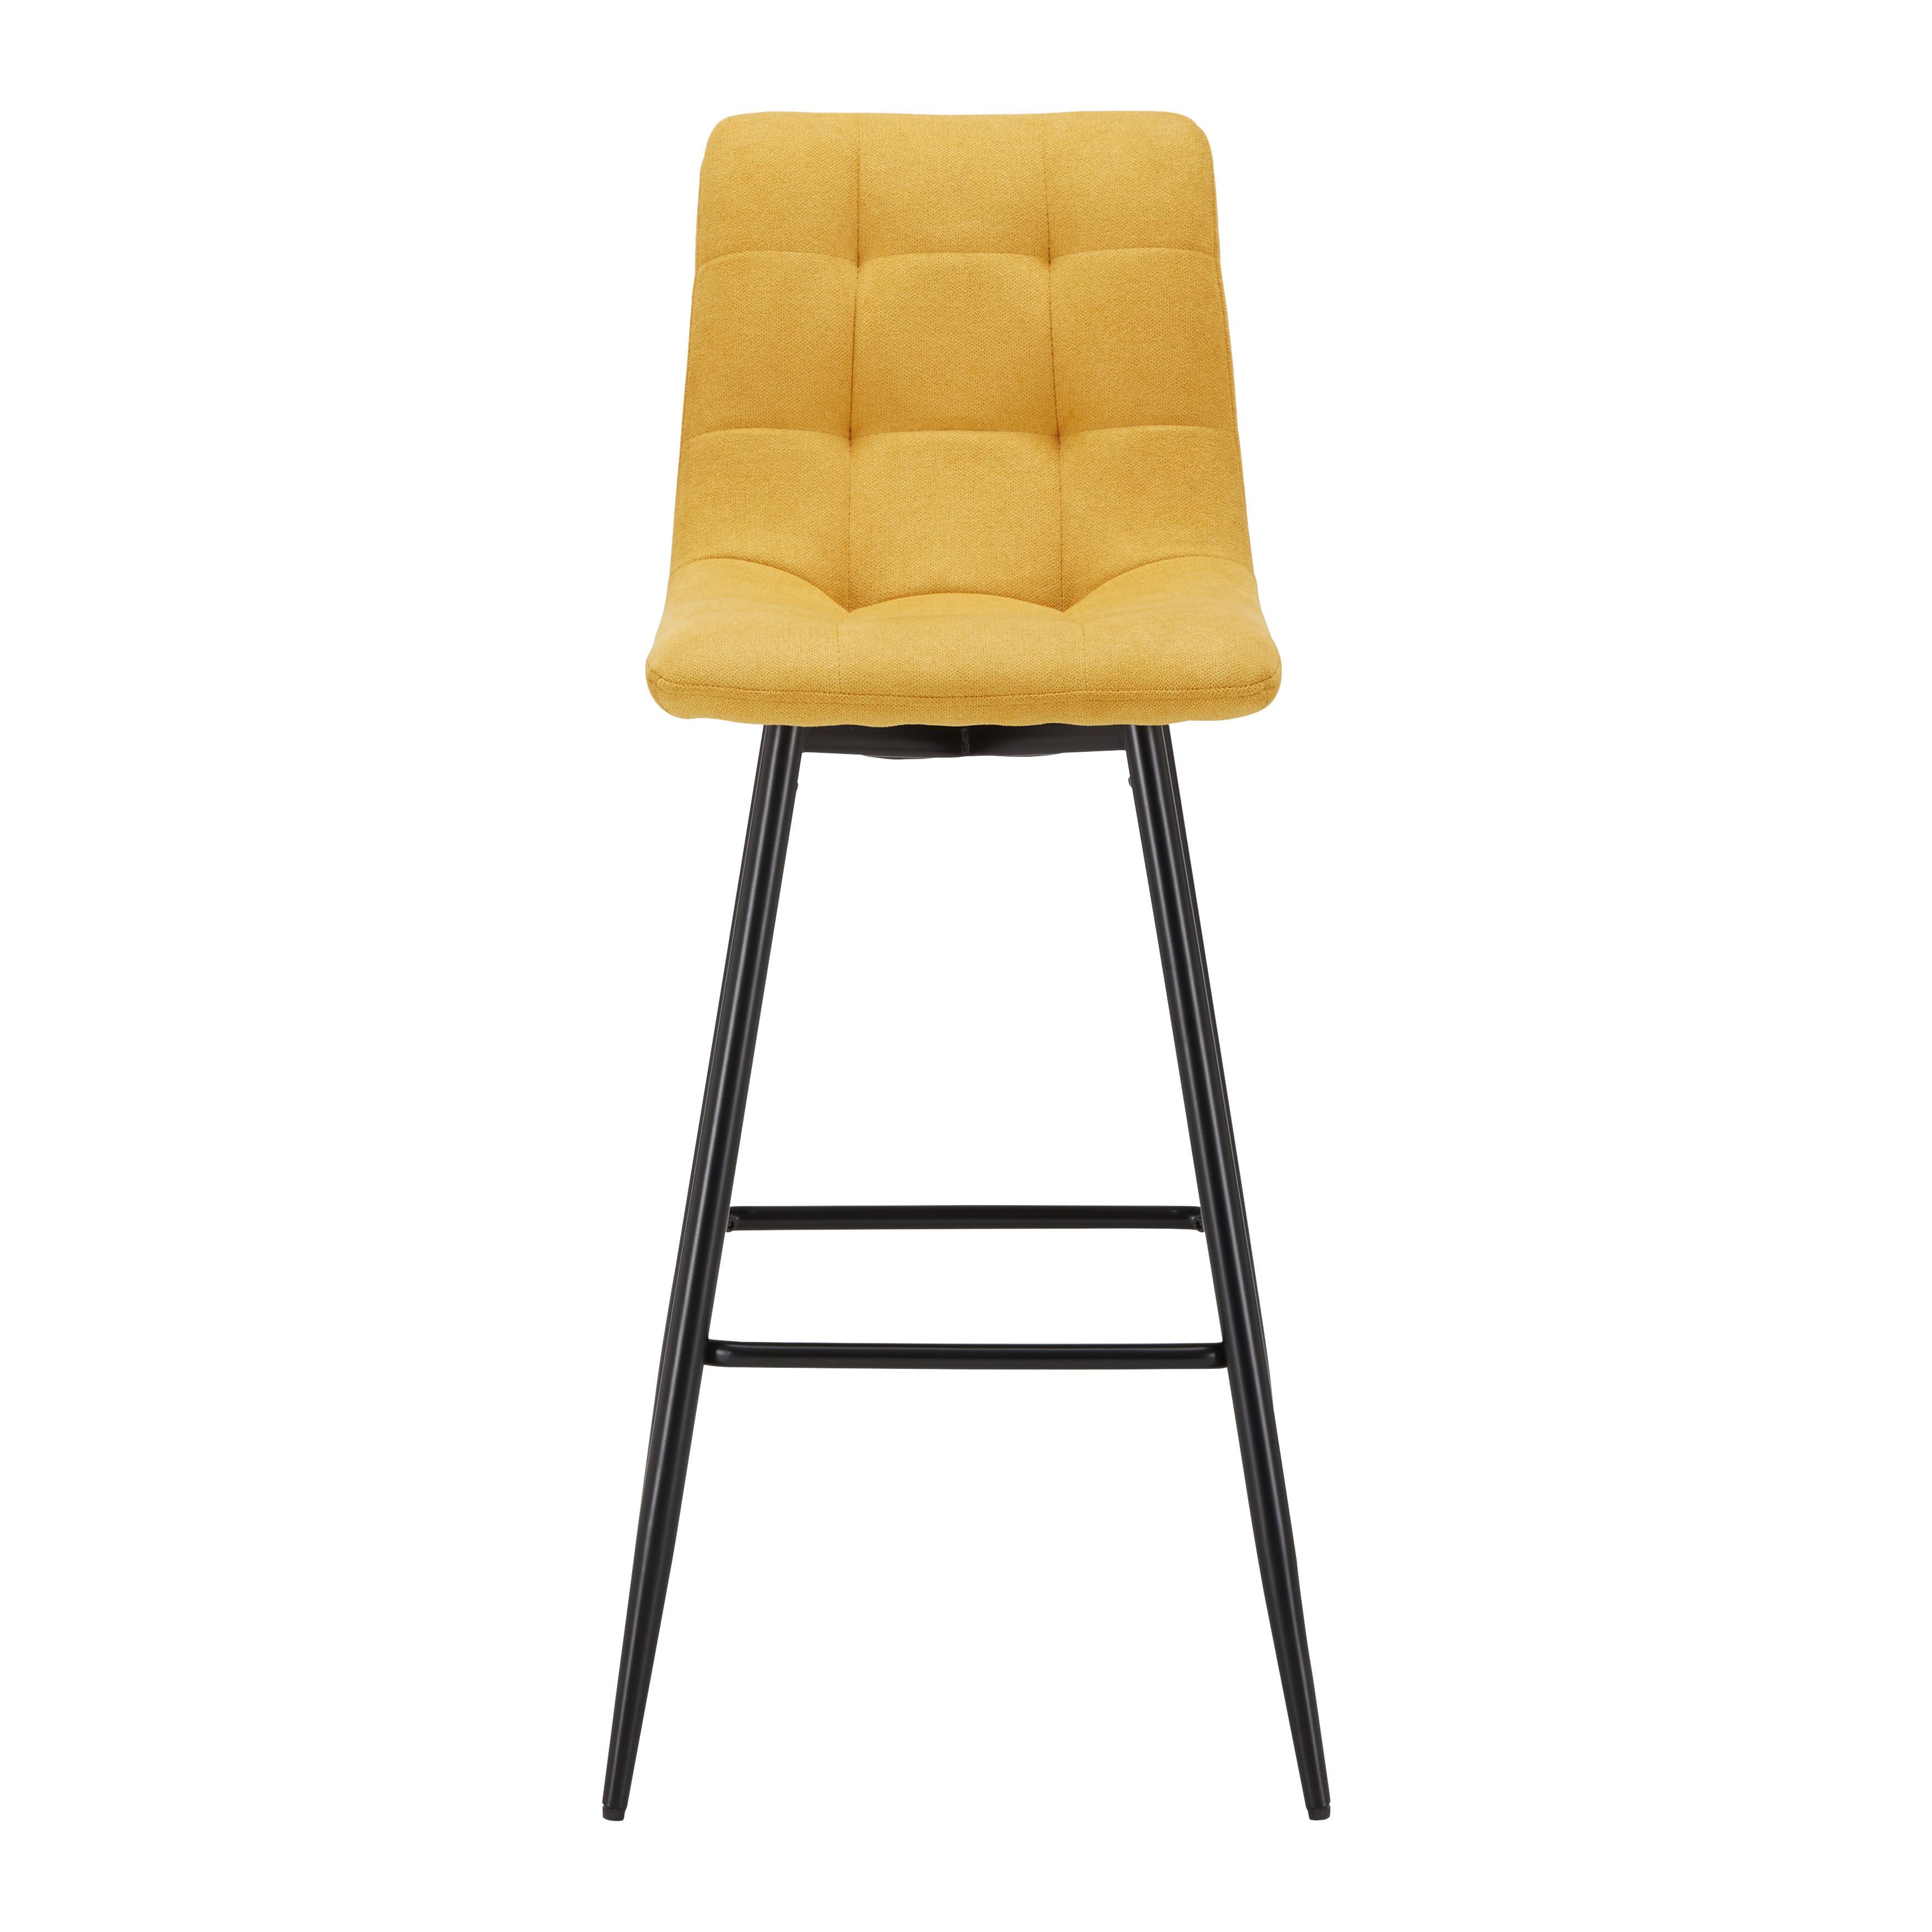 Sada Barových Židlí Luka Žlutá - černá/žlutá, Moderní, kov/dřevo (42,5/100/49cm) - P & B